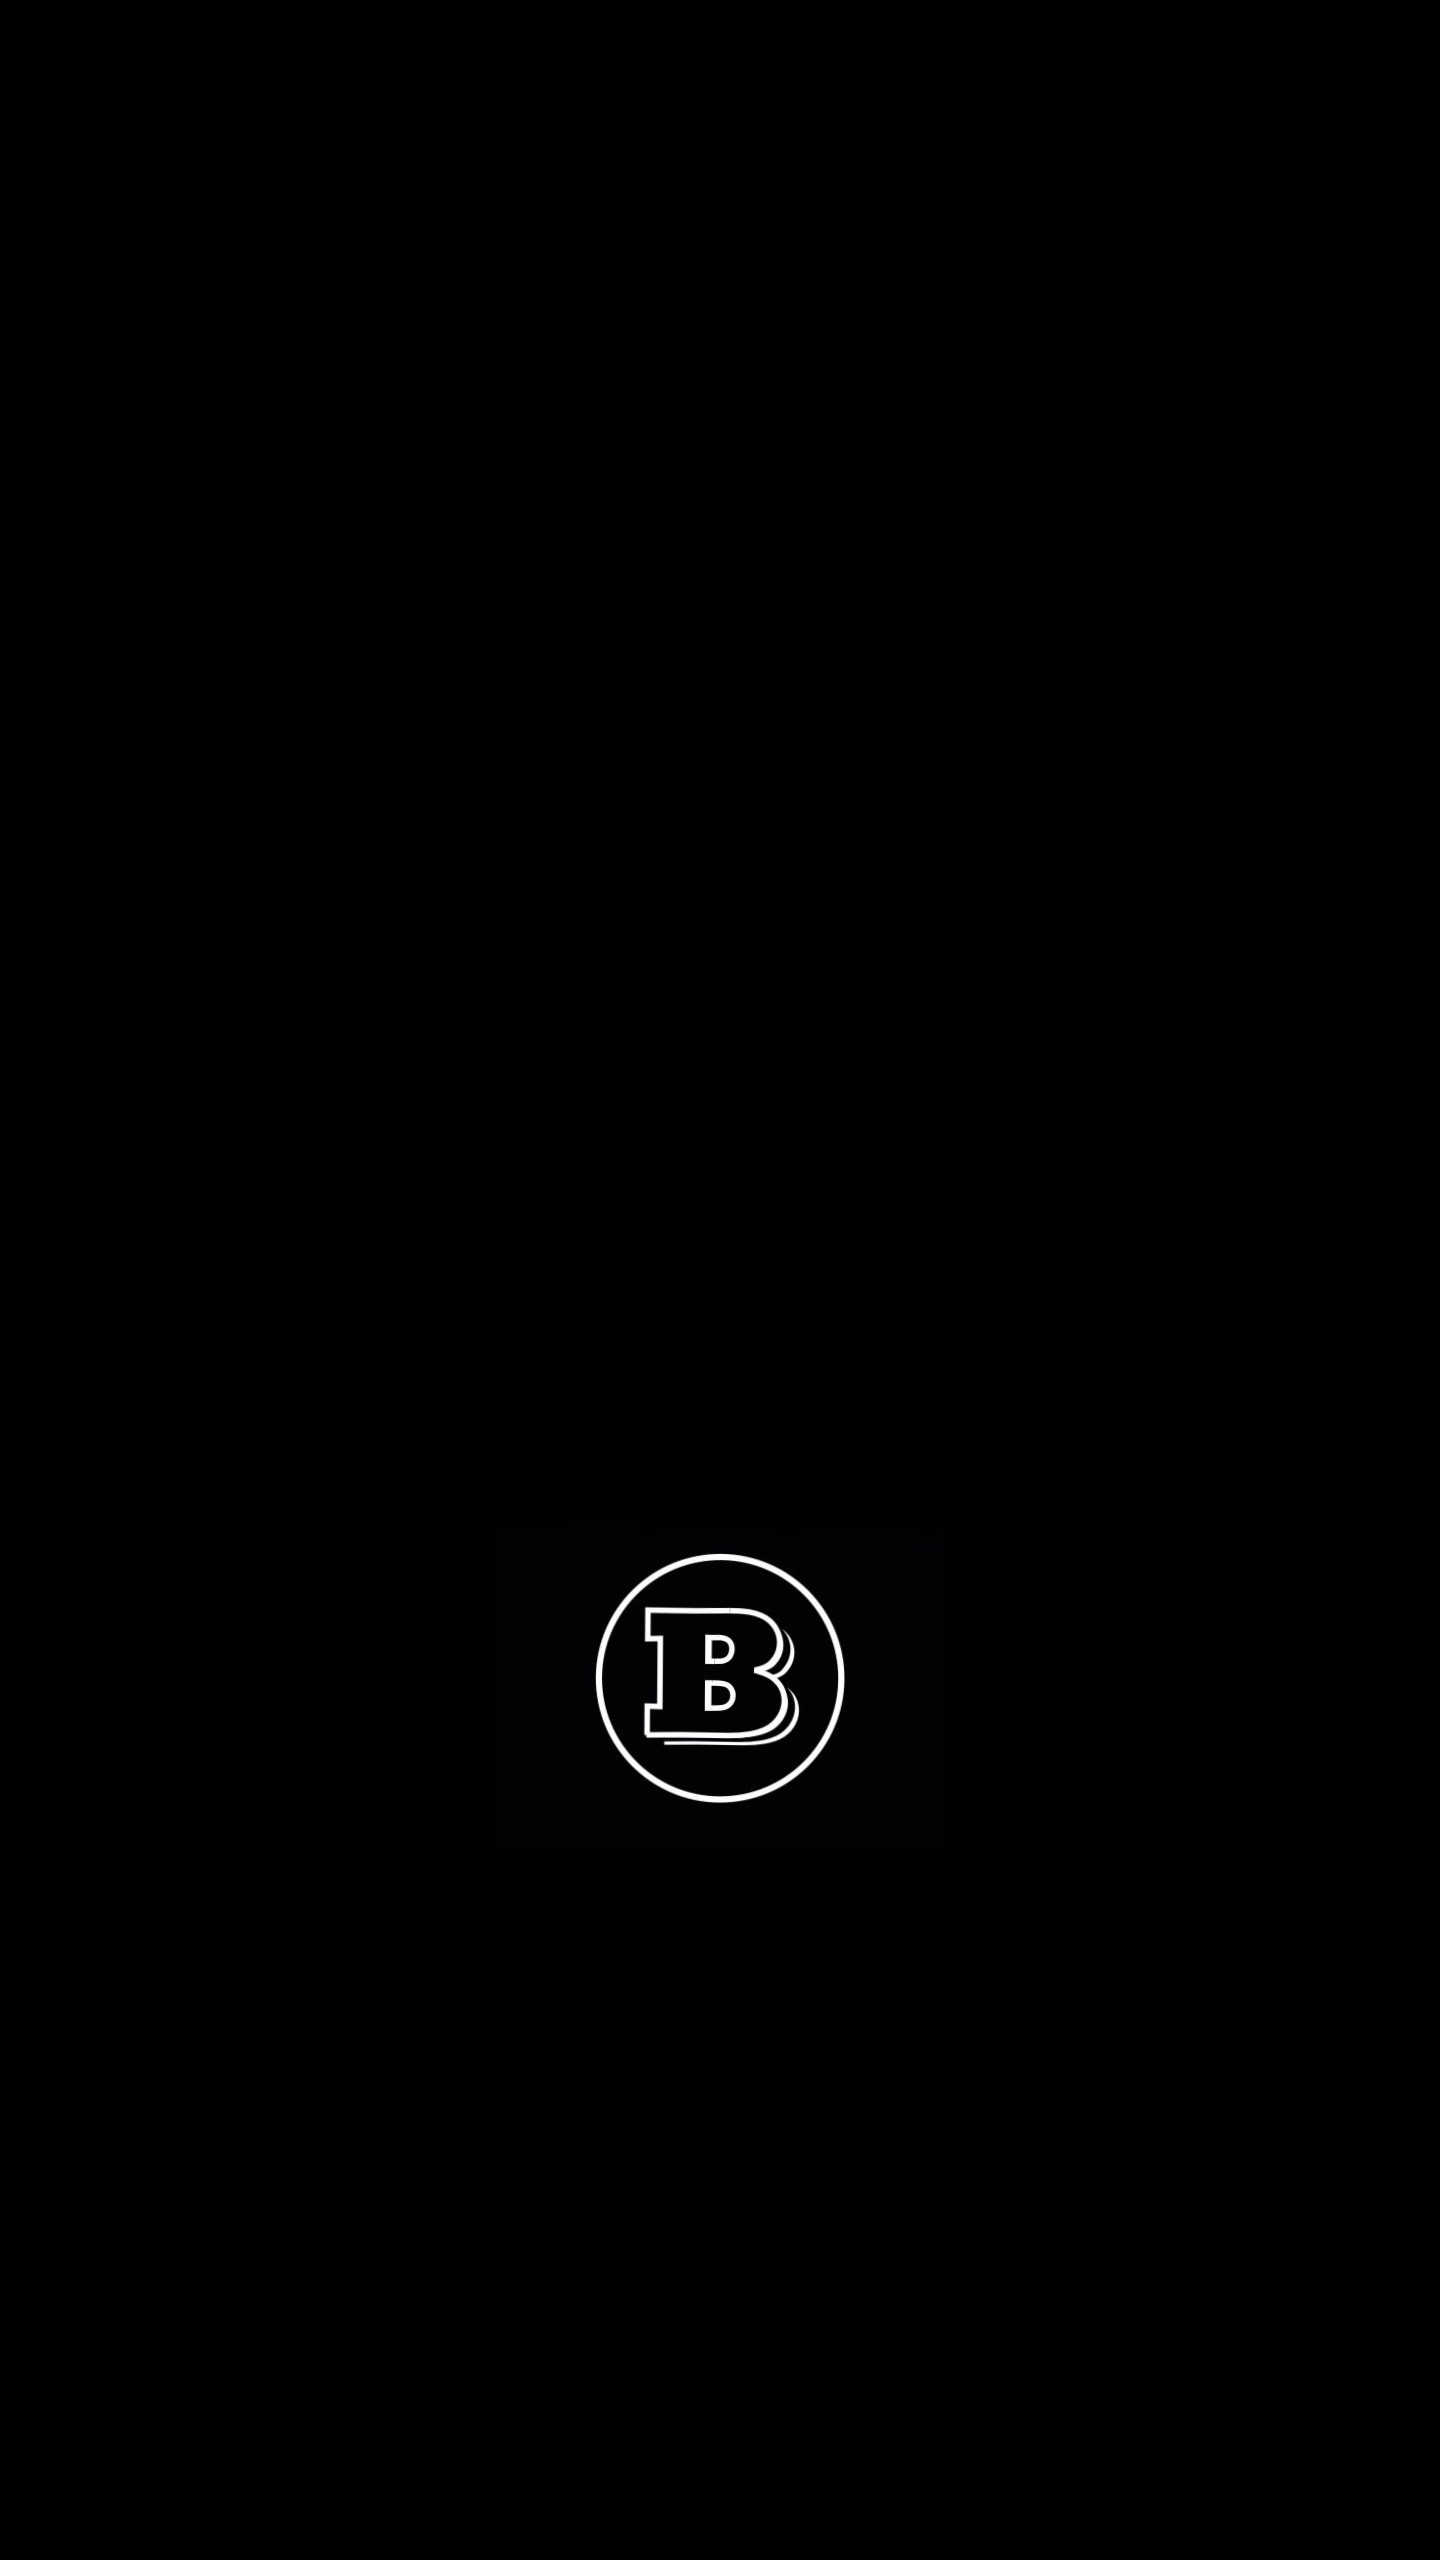 General 1440x2560 Brabus black logo portrait display minimalism